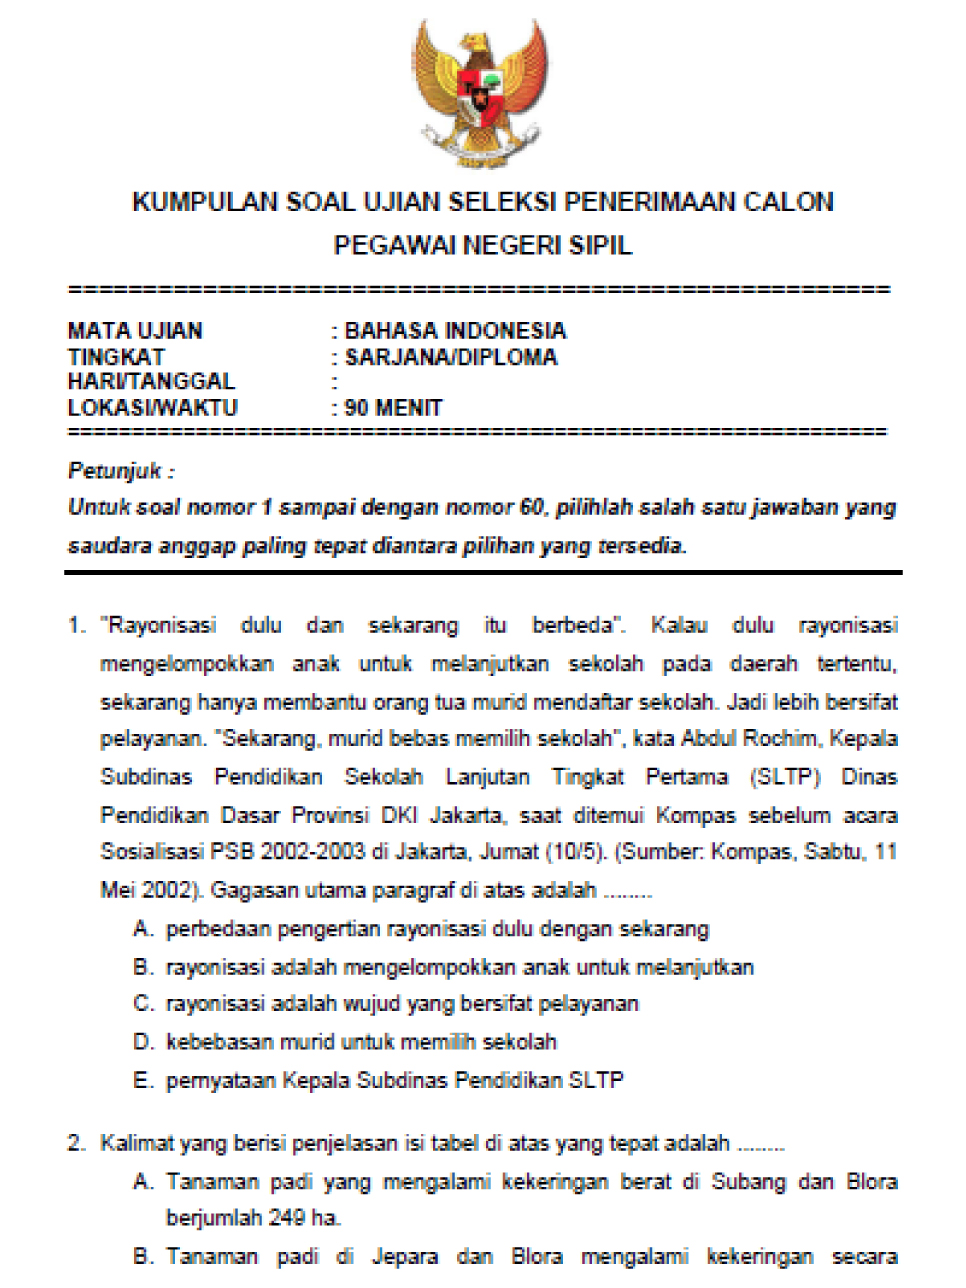 Soal Ujian Seleksi CPNS 2015 (Soal Bahasa Indonesia) - 16 foldersoal